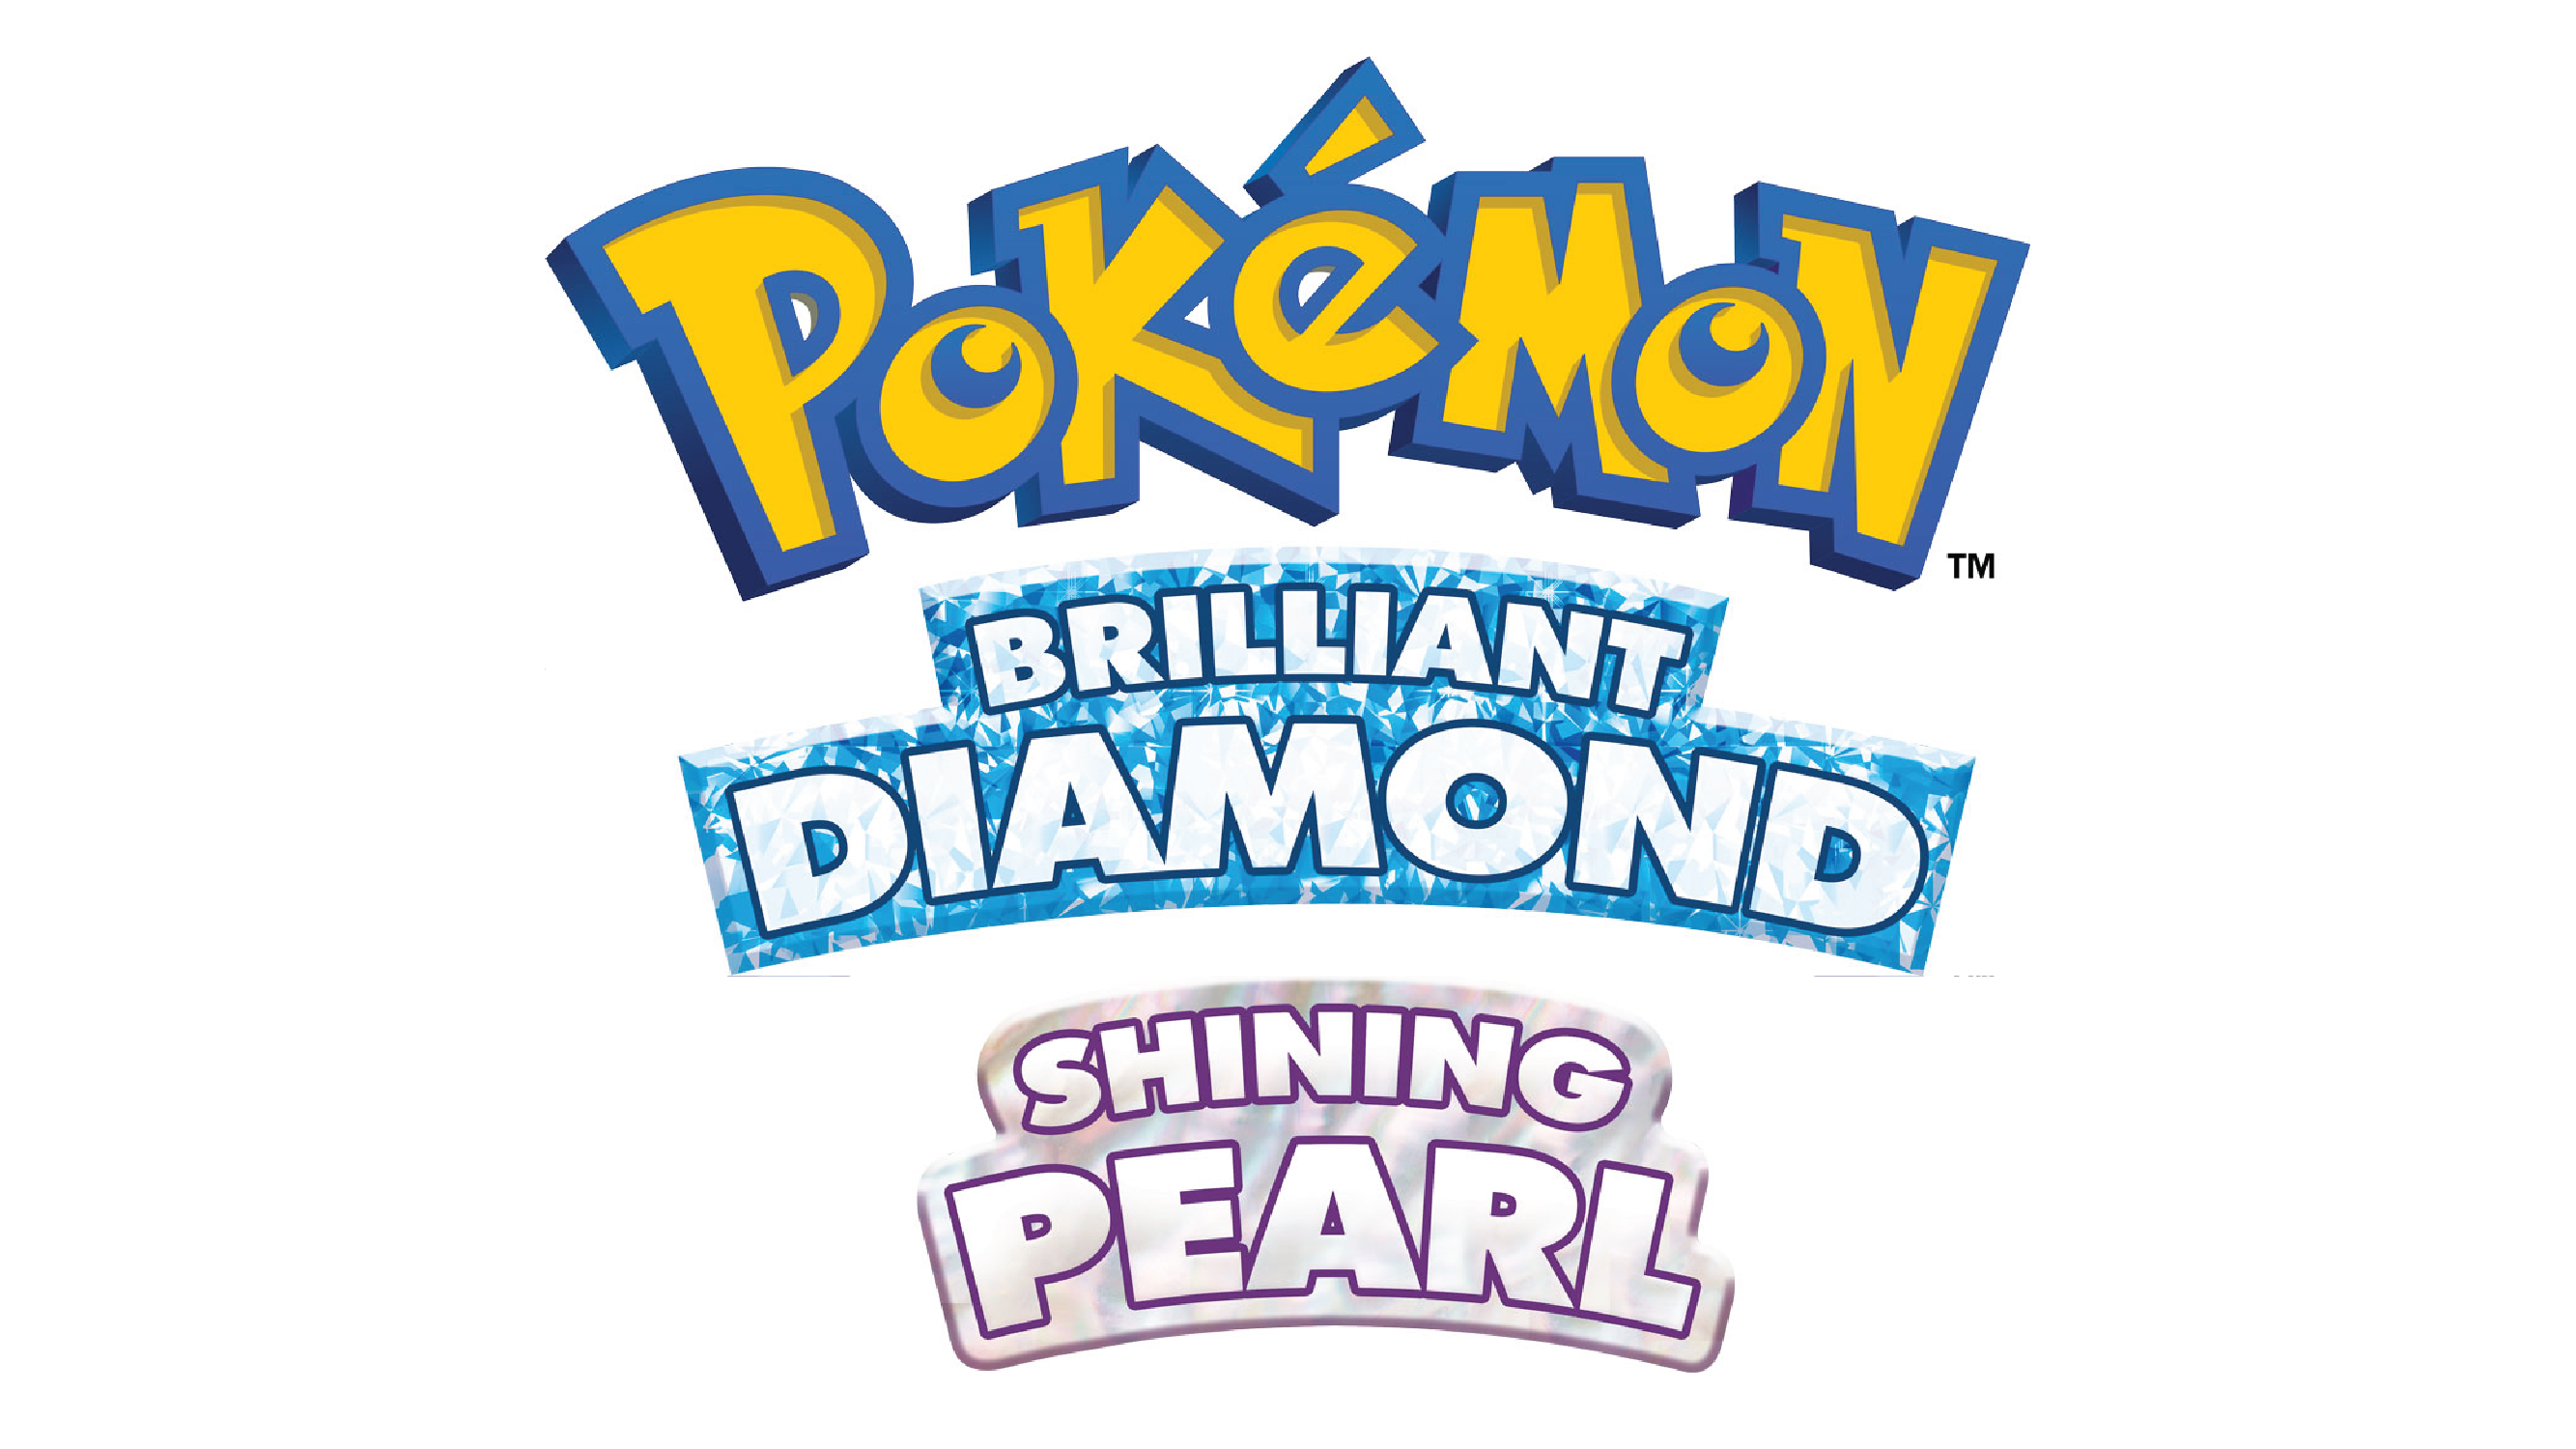 Pokemon Brilliant Diamond and Shining Pearl preview: Revitalizing